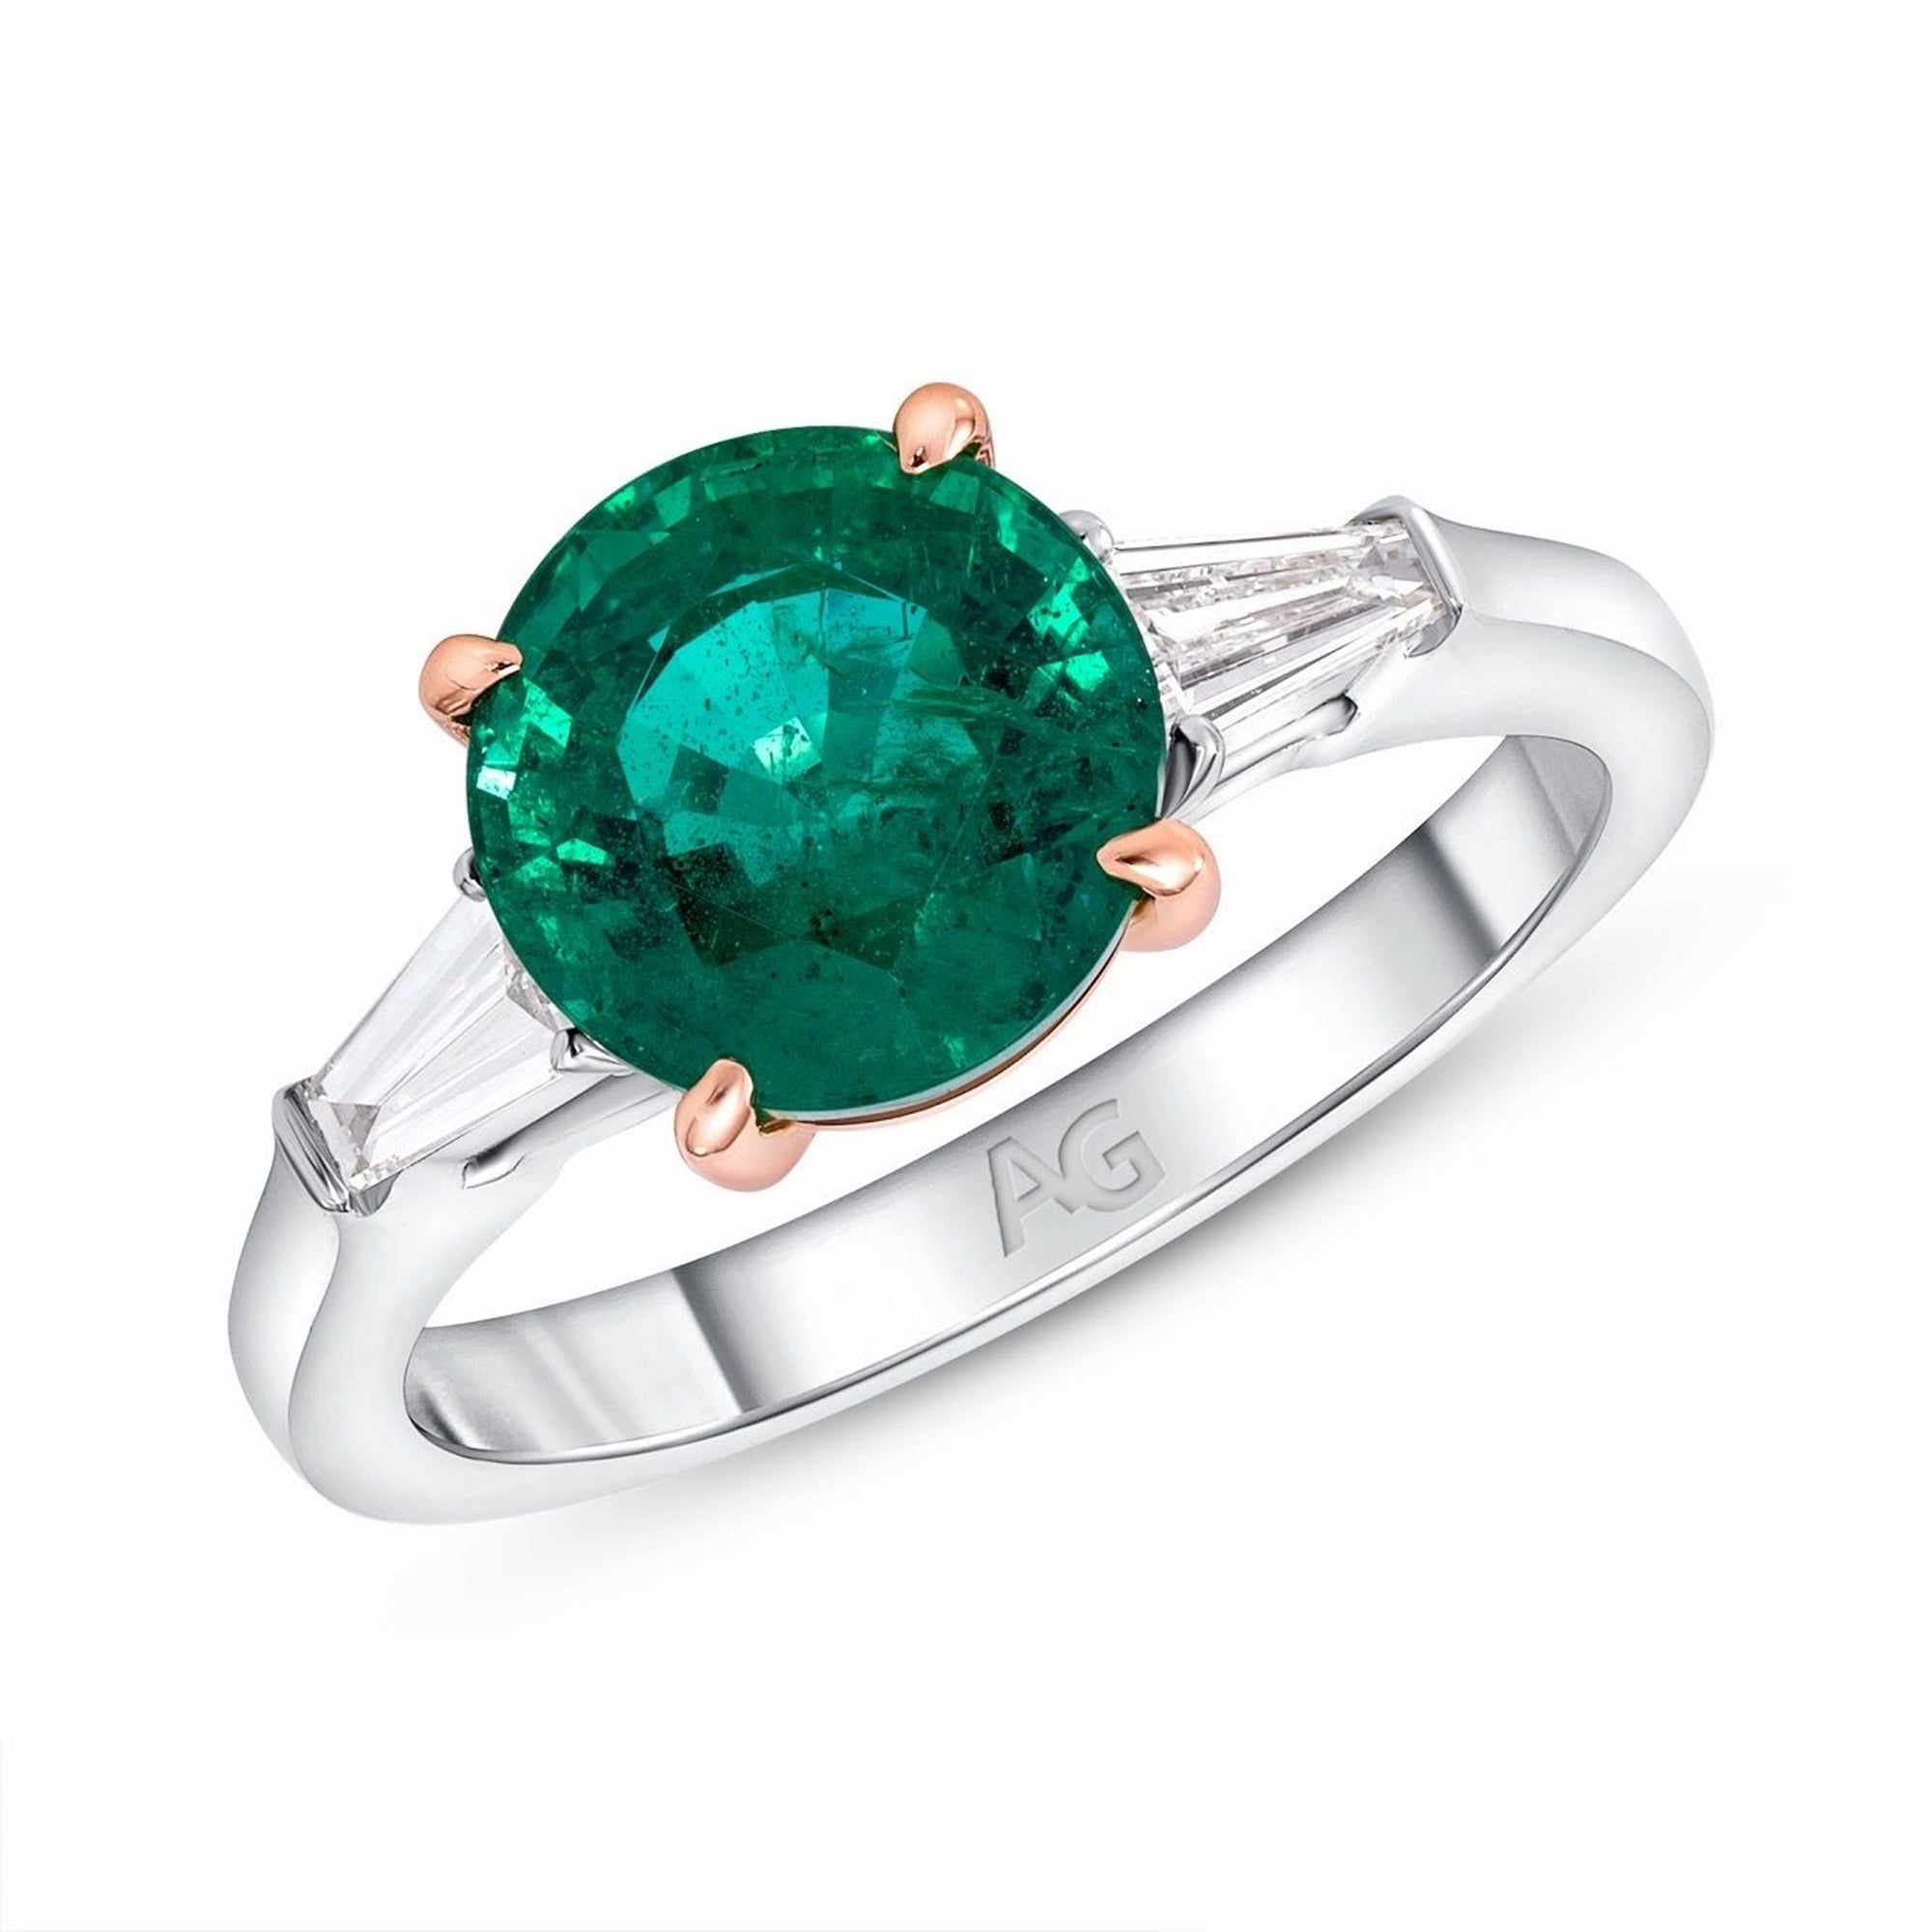 The Radiant Cushion Emerald Ring